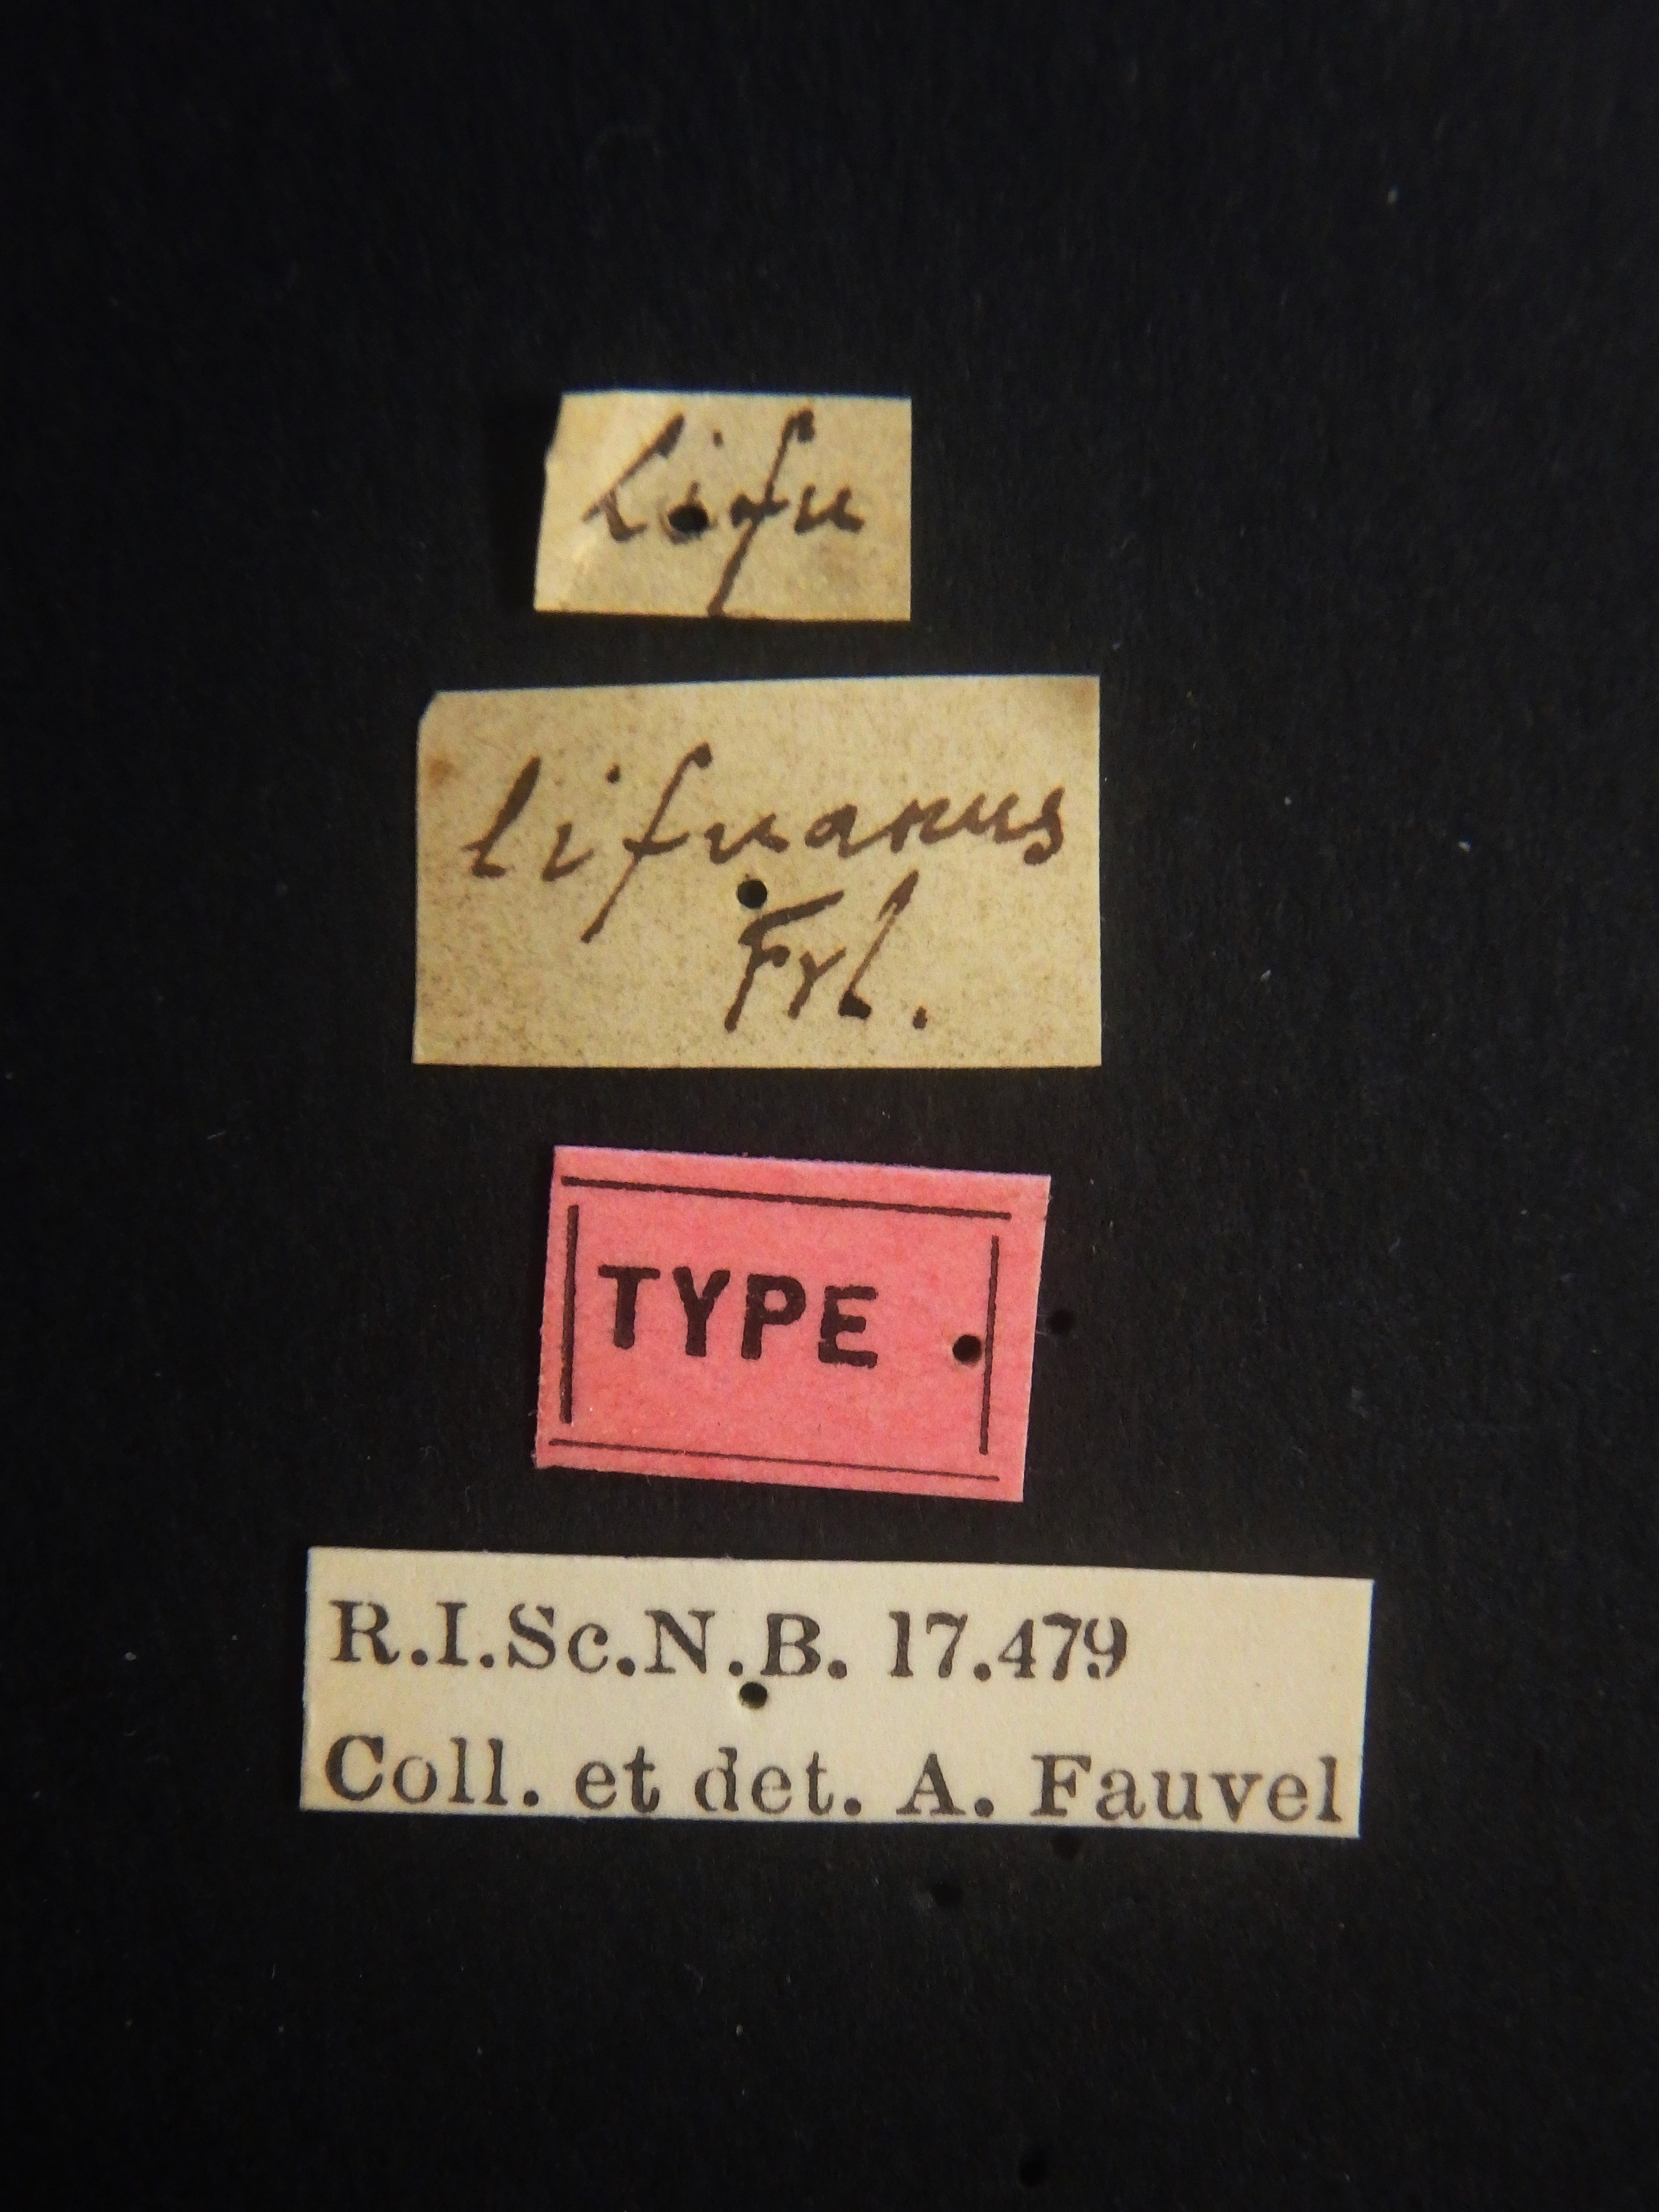 Hesperus lifuanus t Labels.JPG